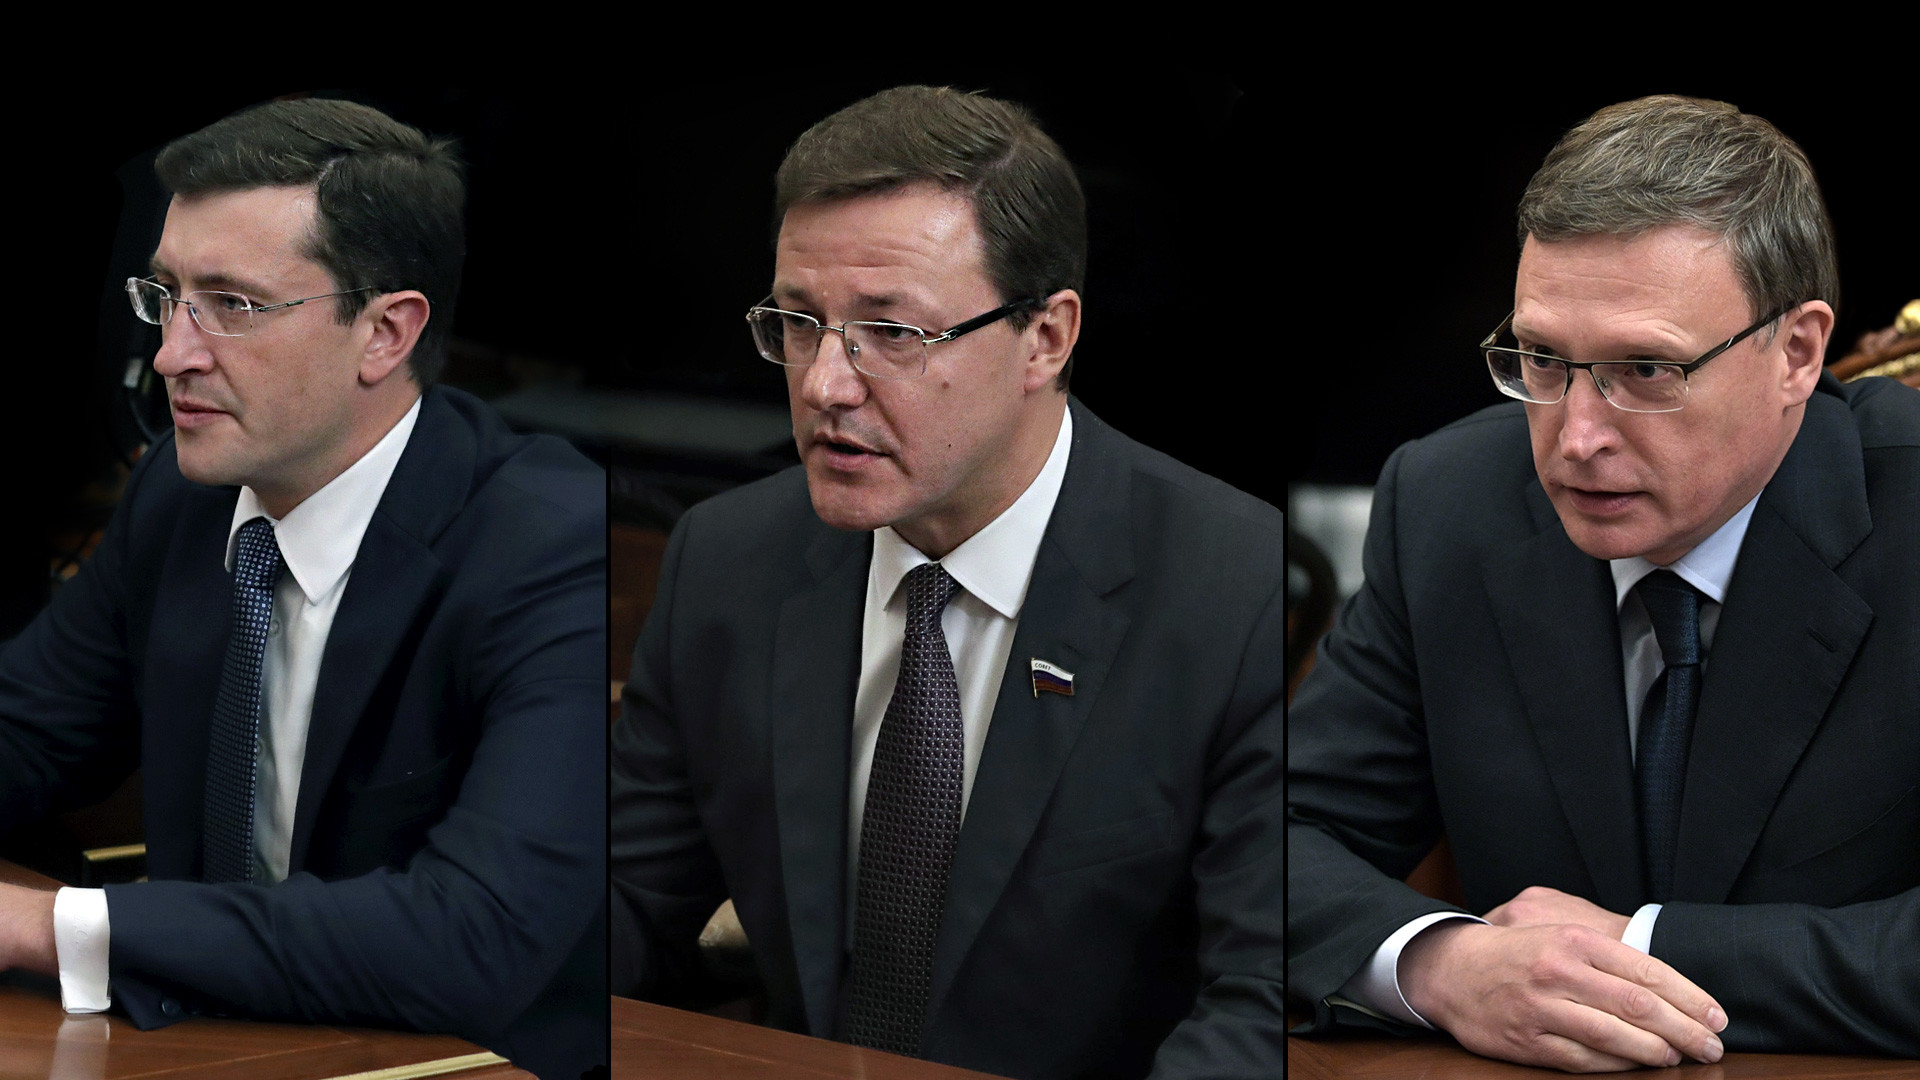 Gleb Nikitin, Dmitry Azarov, Alexander Burkov (from left to right) - three interim governors appointed by Vladimir Putin in autumn 2017.